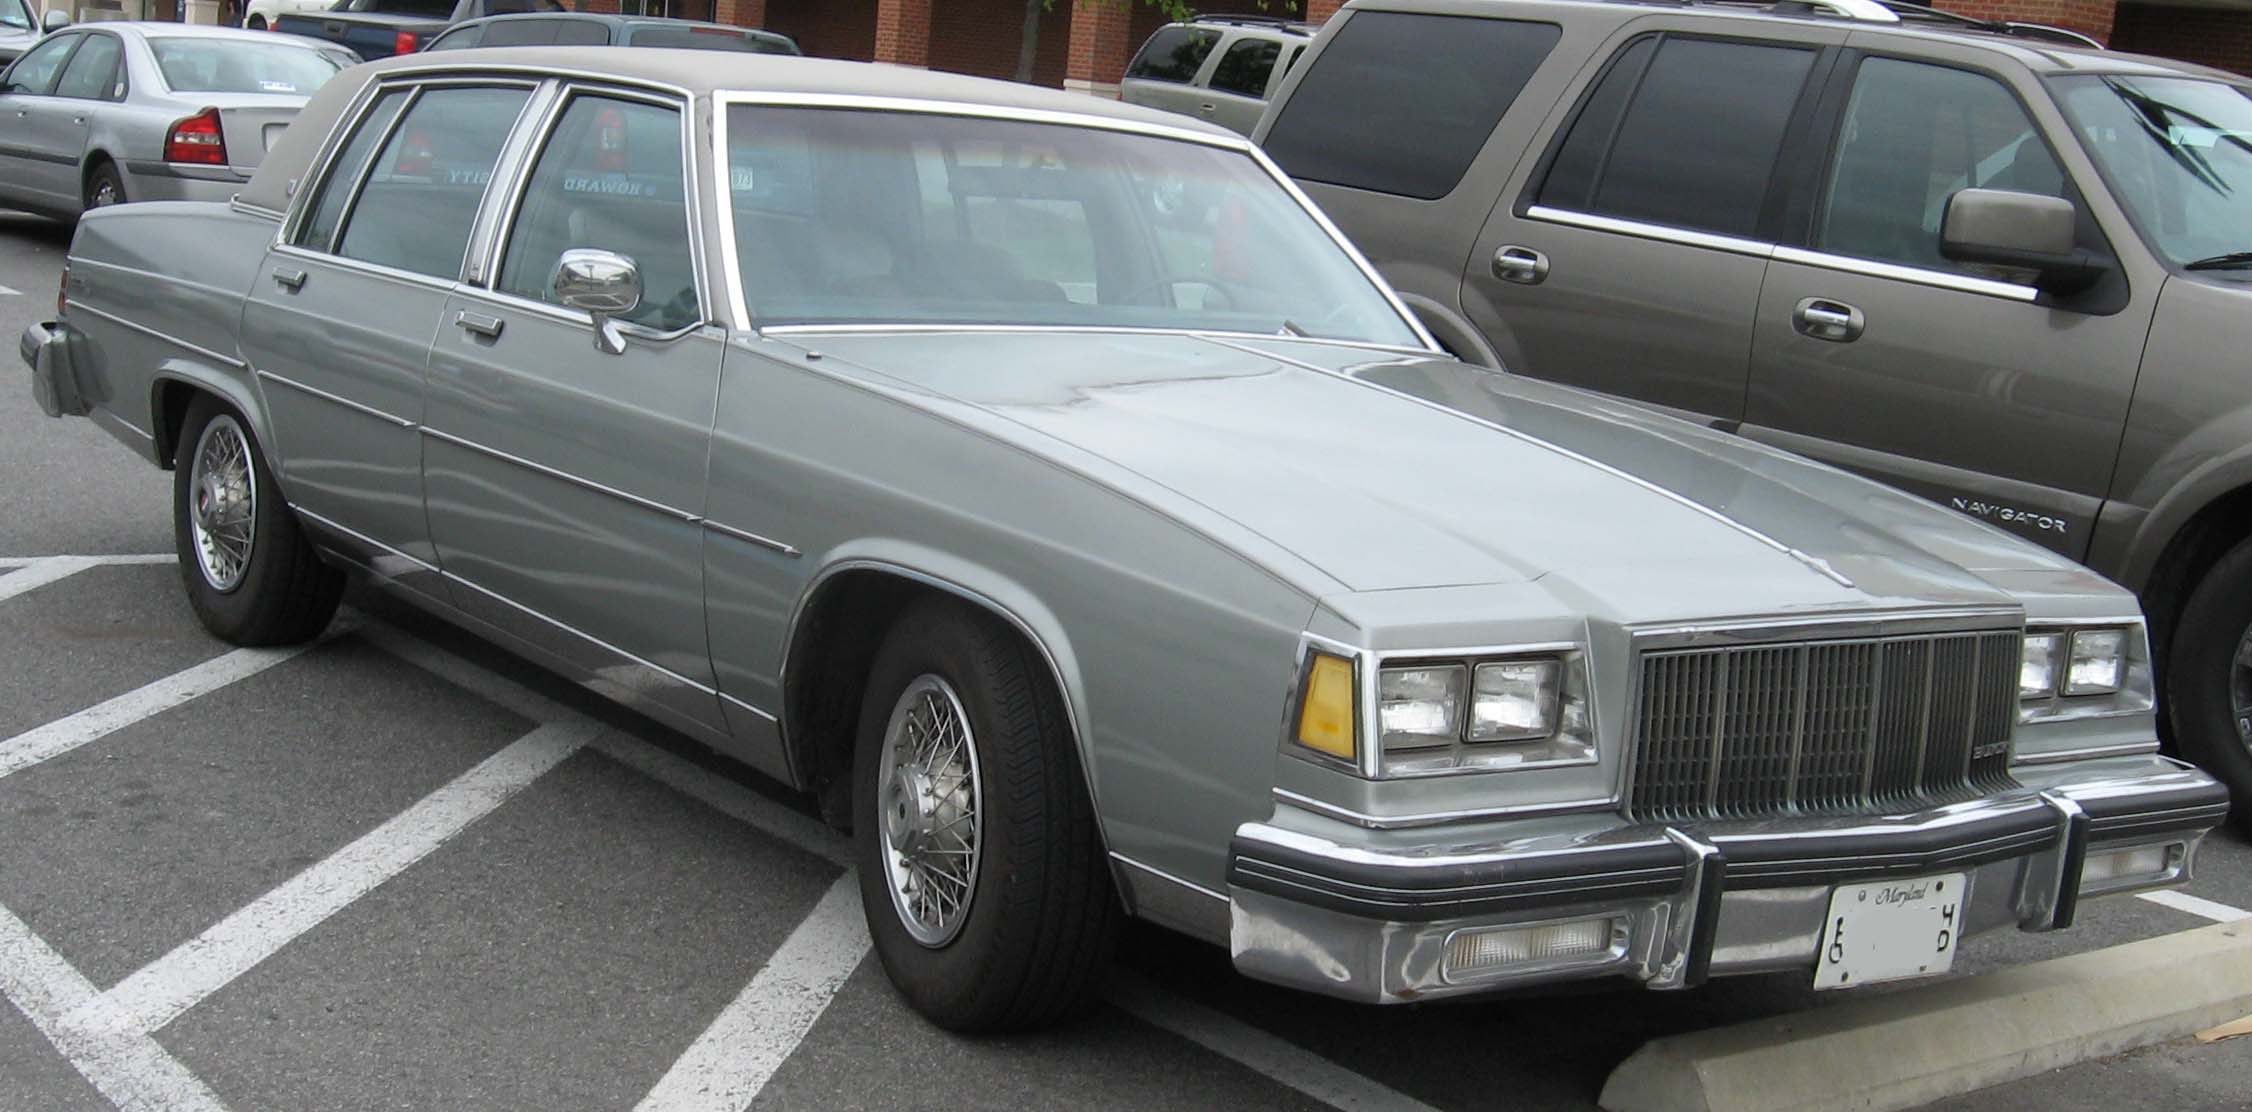 File:Buick-Electra-sedan.jpg - Wikimedia Commons